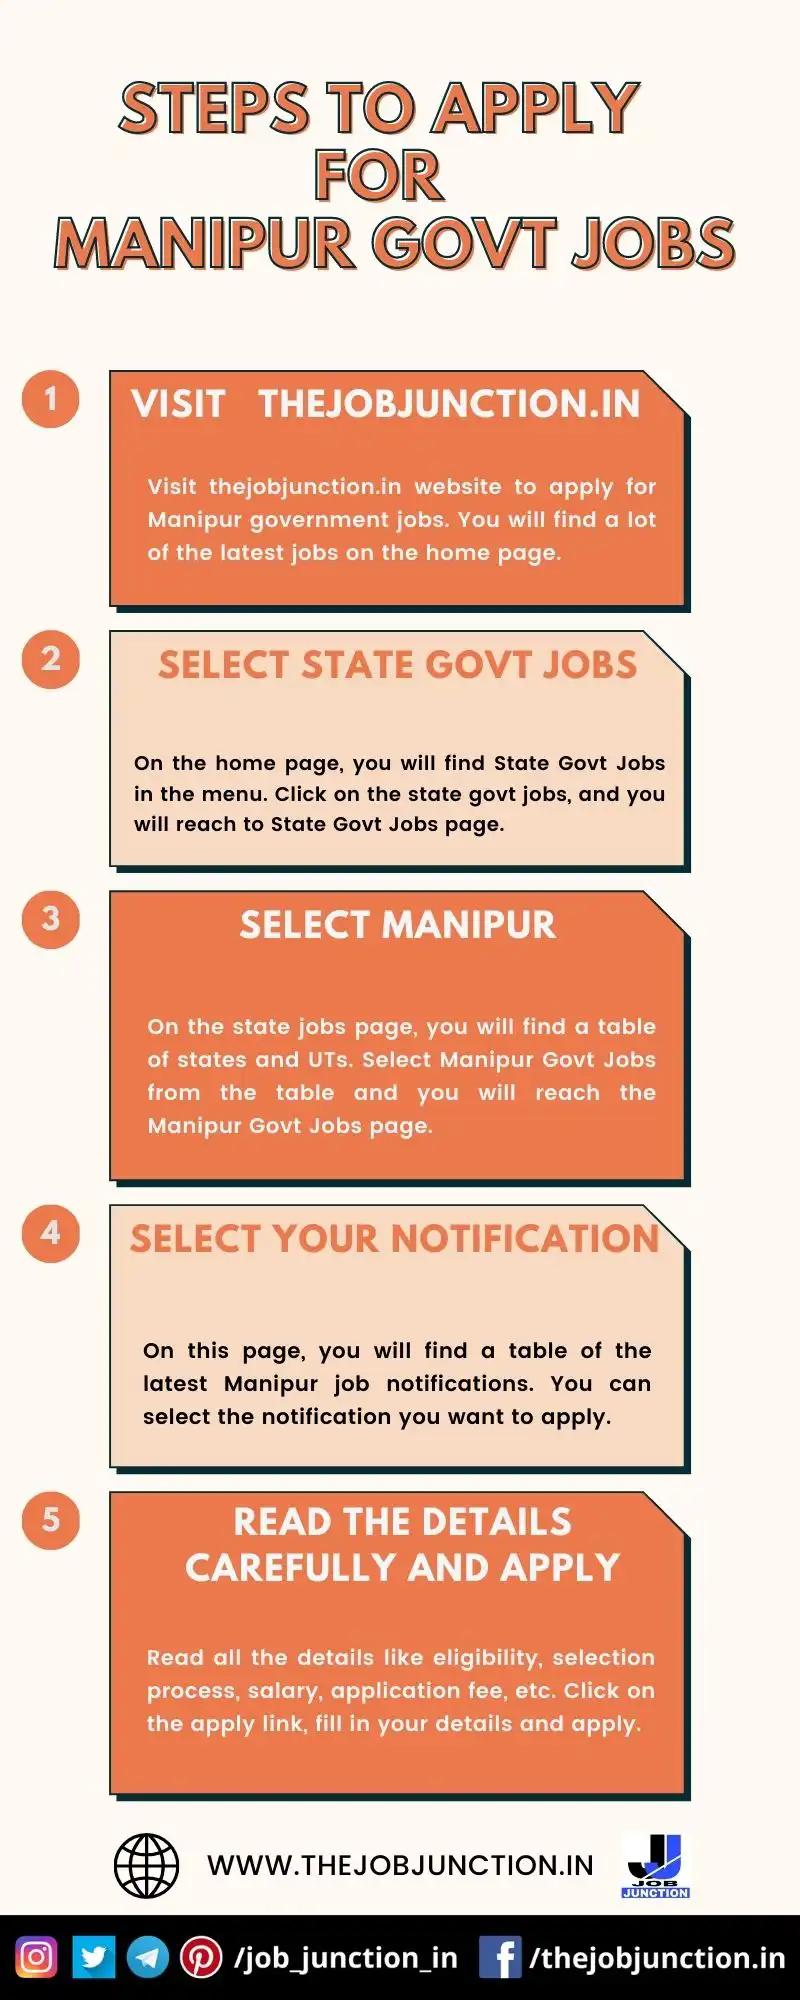 STEPS TO APPLY FOR MANIPUR GOVT JOBS